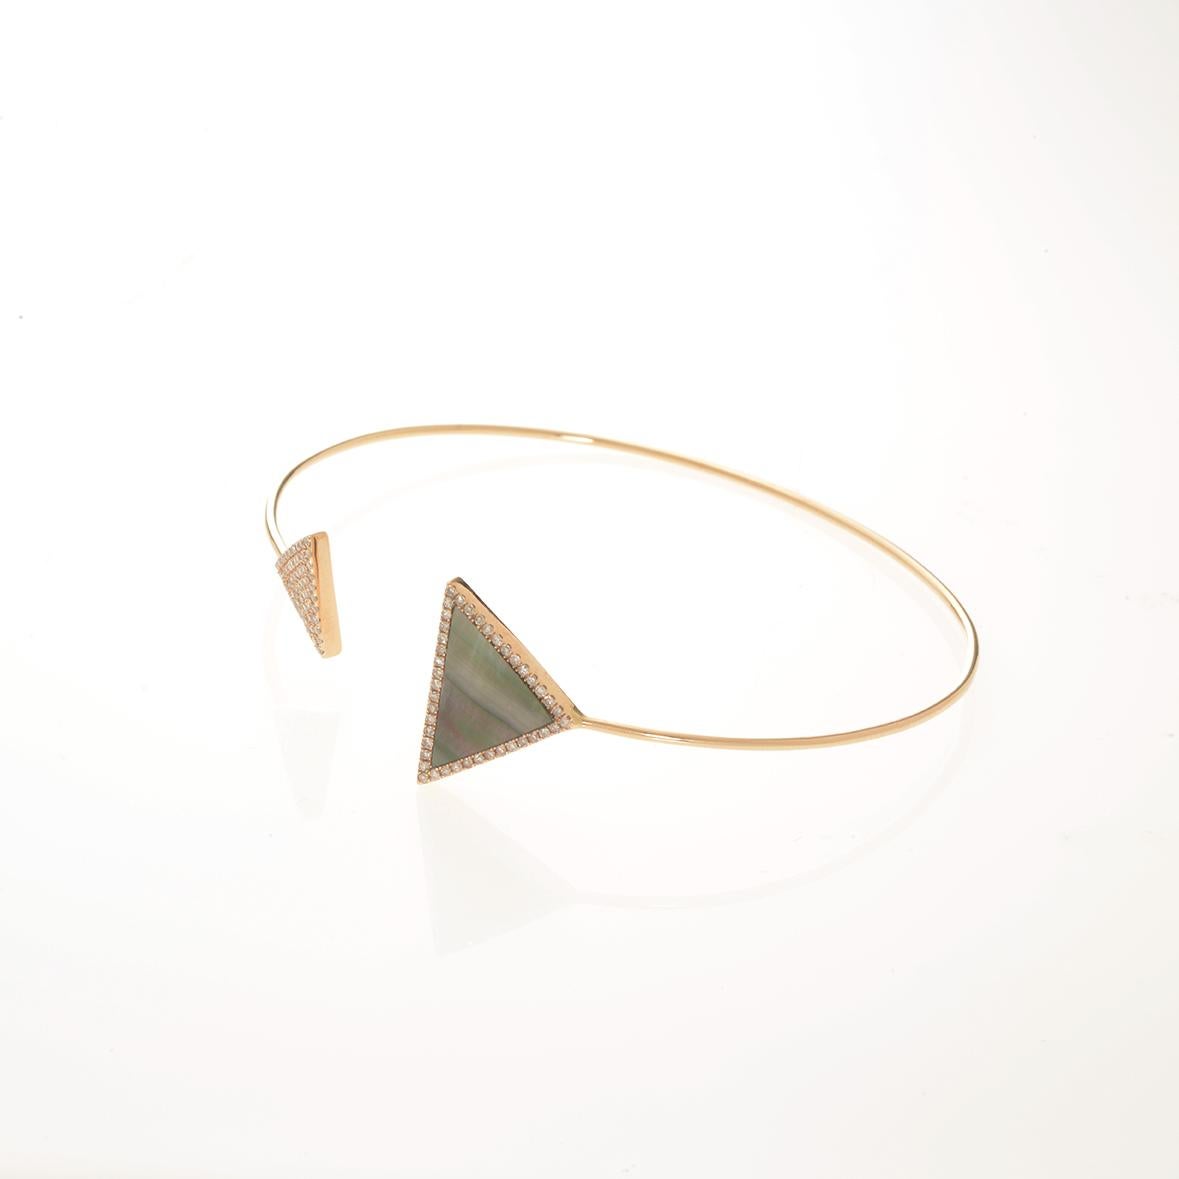 Armband aus Perlmutt und Diamanten in 18 k Roségold.

6.3 cm x 5.3 cm